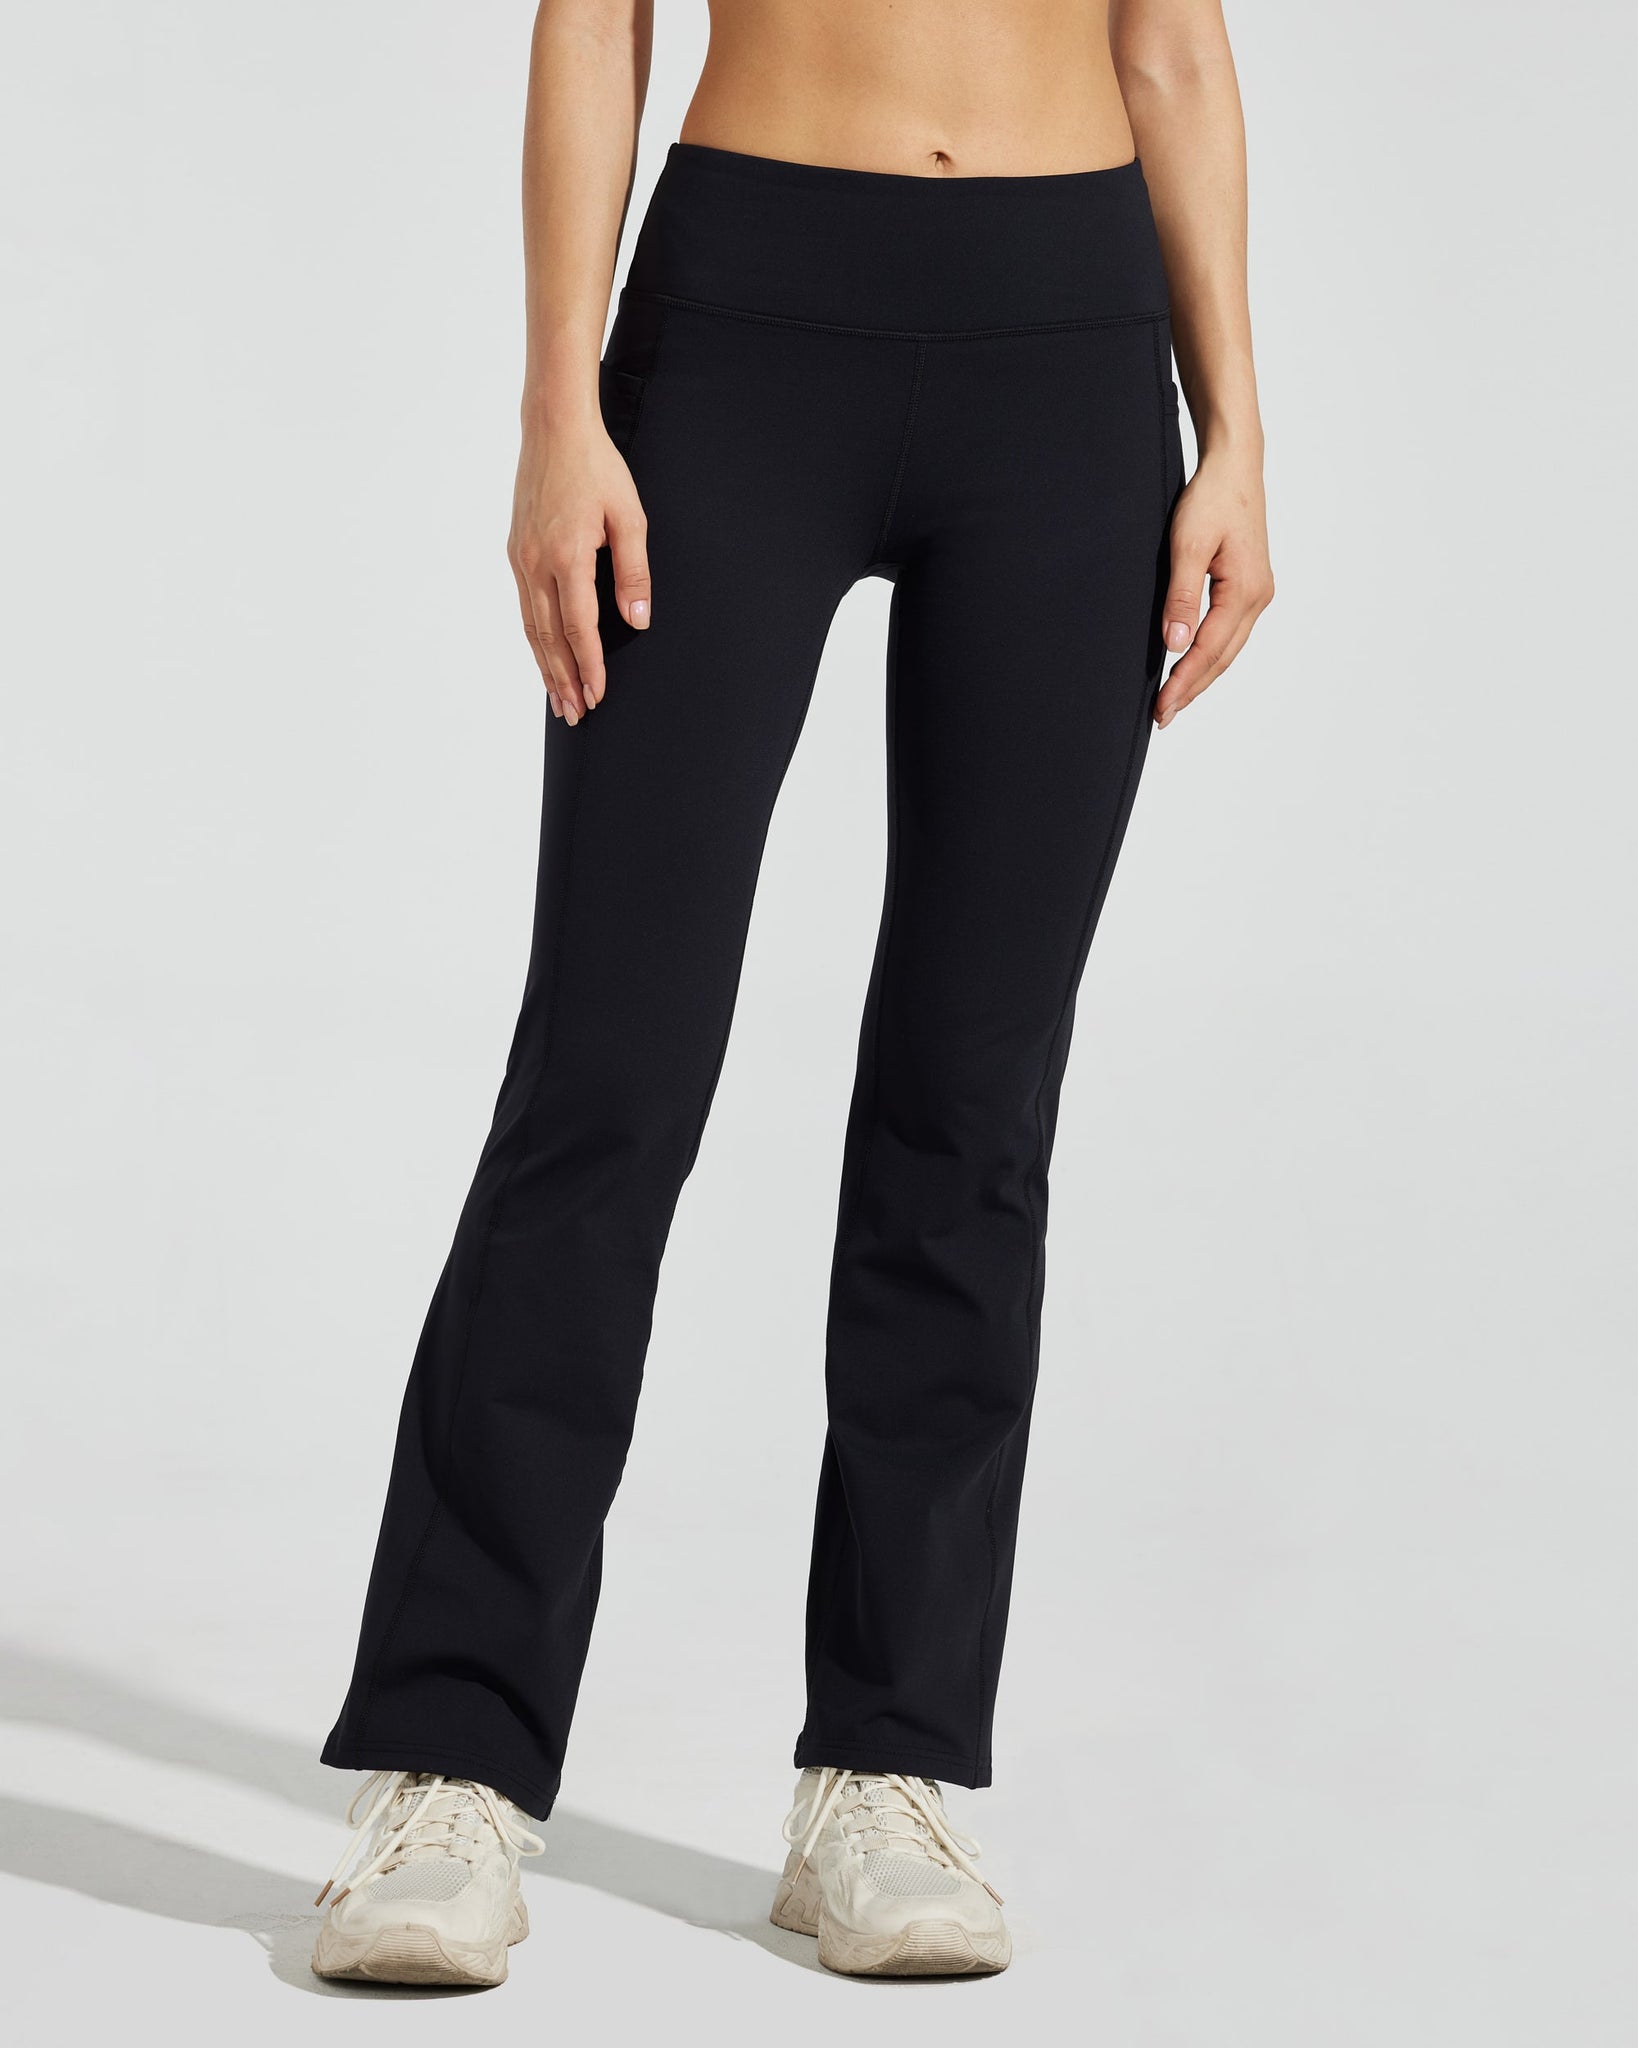 Women's Fleece Lined Bootcut Yoga Pants_Black_model3